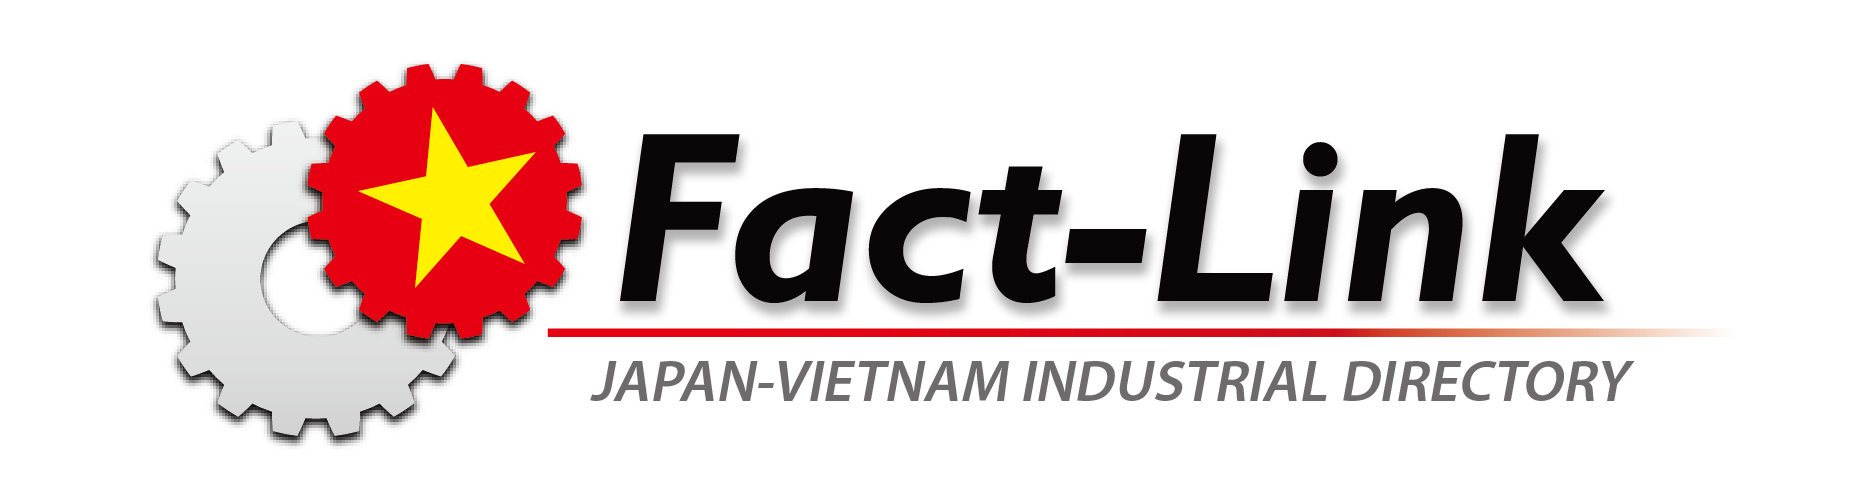 FACT-LINK MARKETPLACE CO.,LTD | Fact-Link Viet Nam